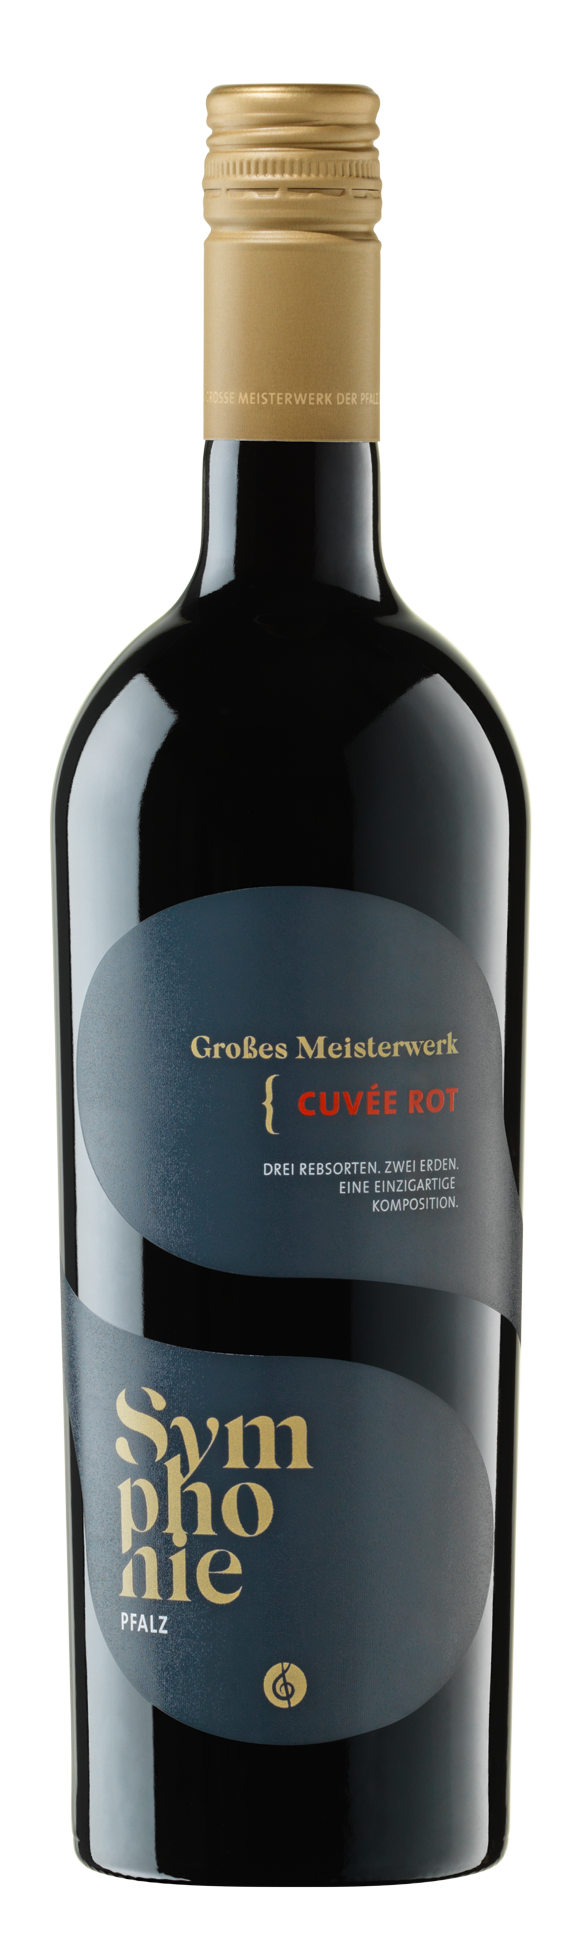 2020 SYMPHONIE Großes Meisterwerk Cuvée Rot trocken 0,75 L - Deutsches Weintor